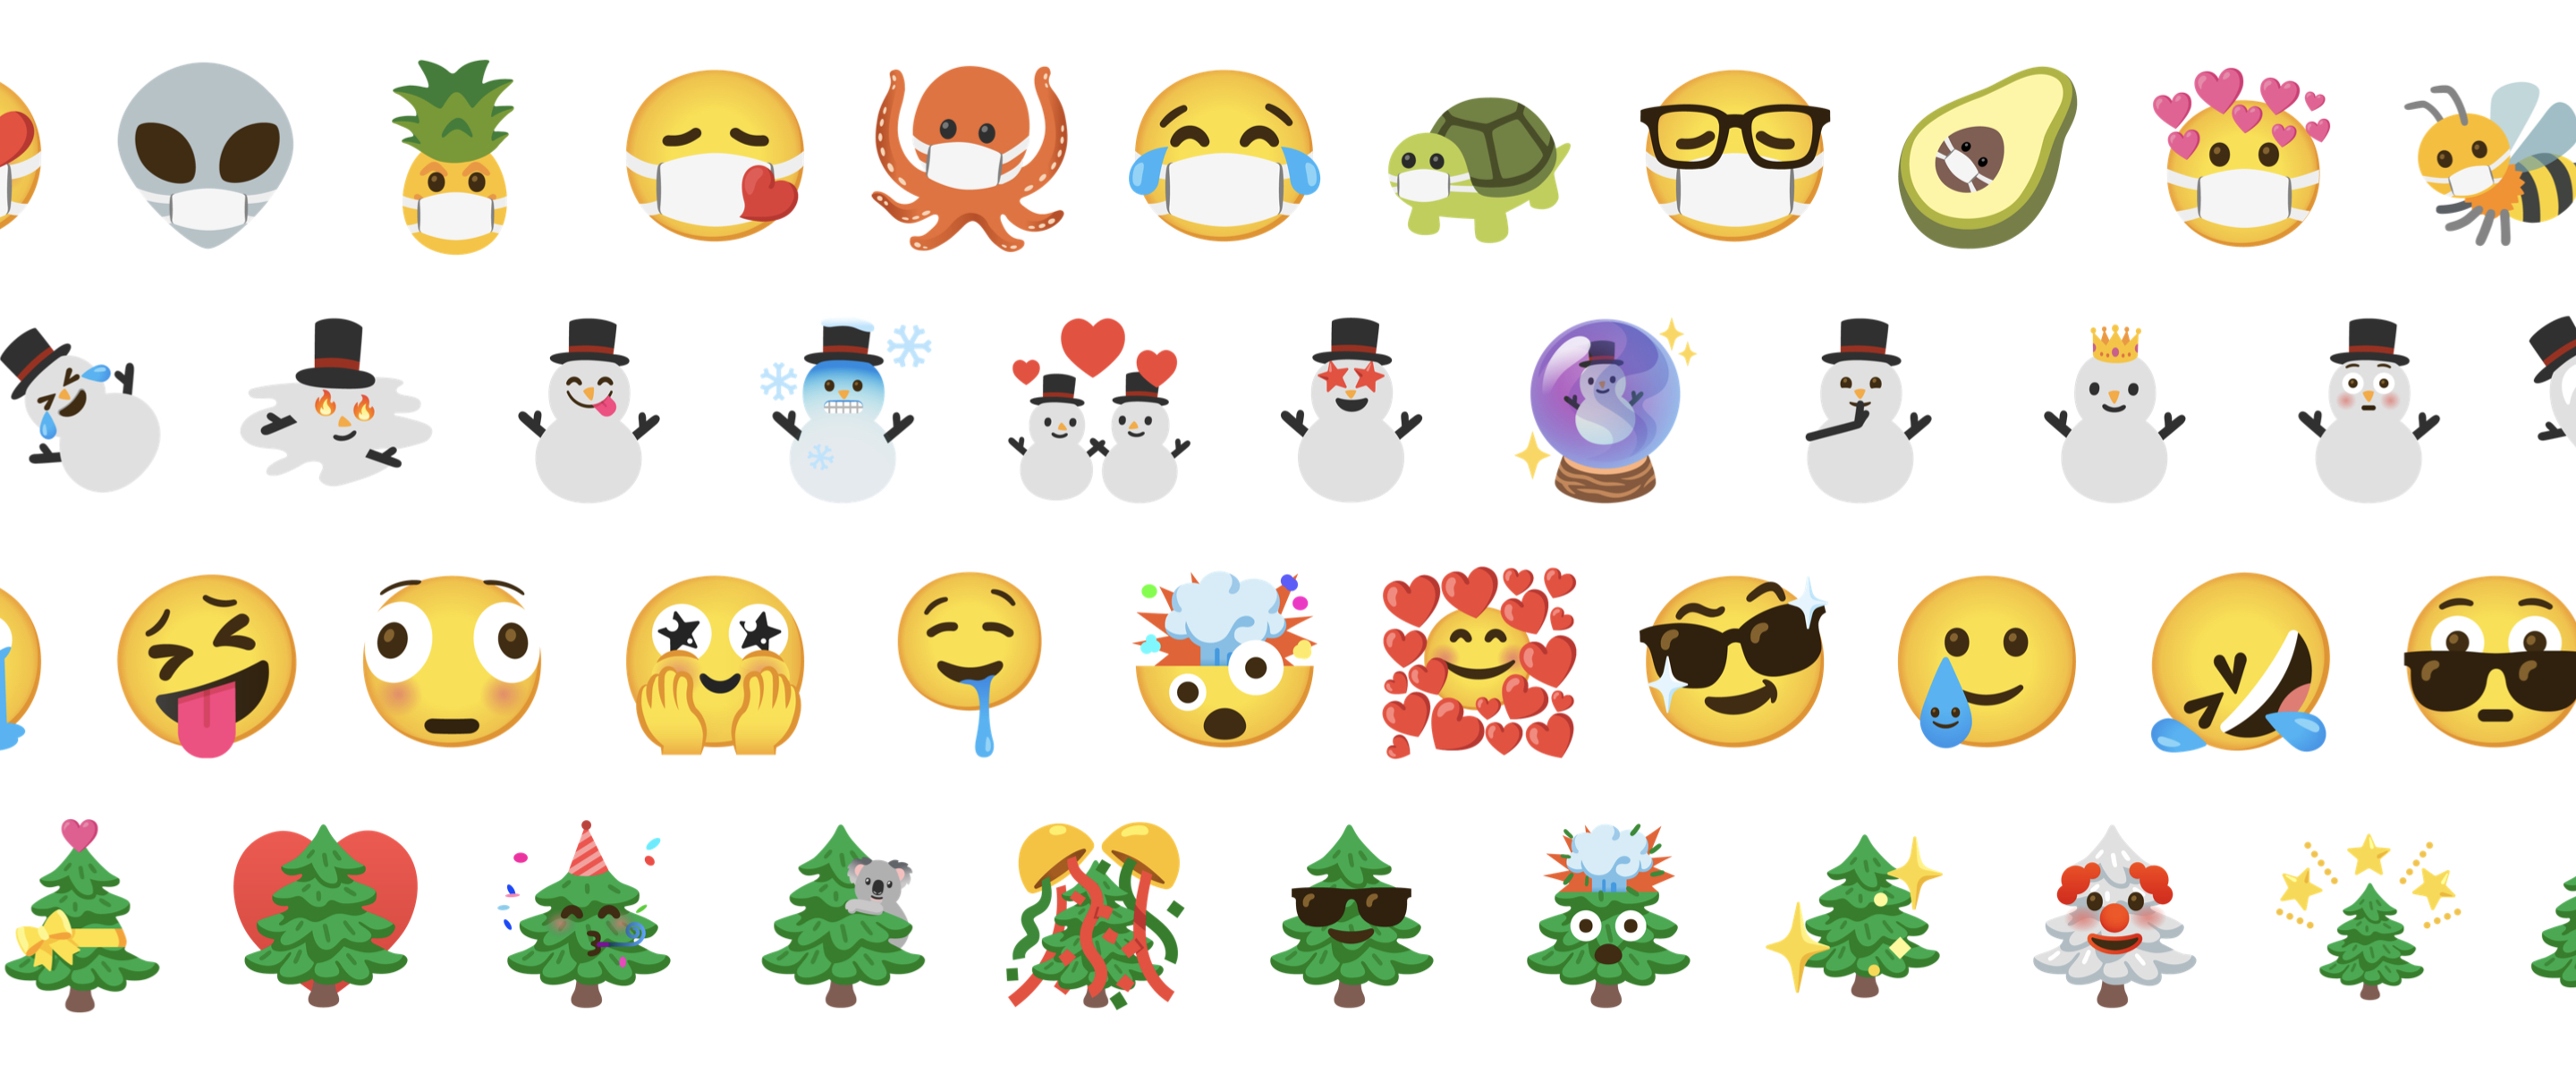 Emoji Kitchen cooks up a new batch of mashups